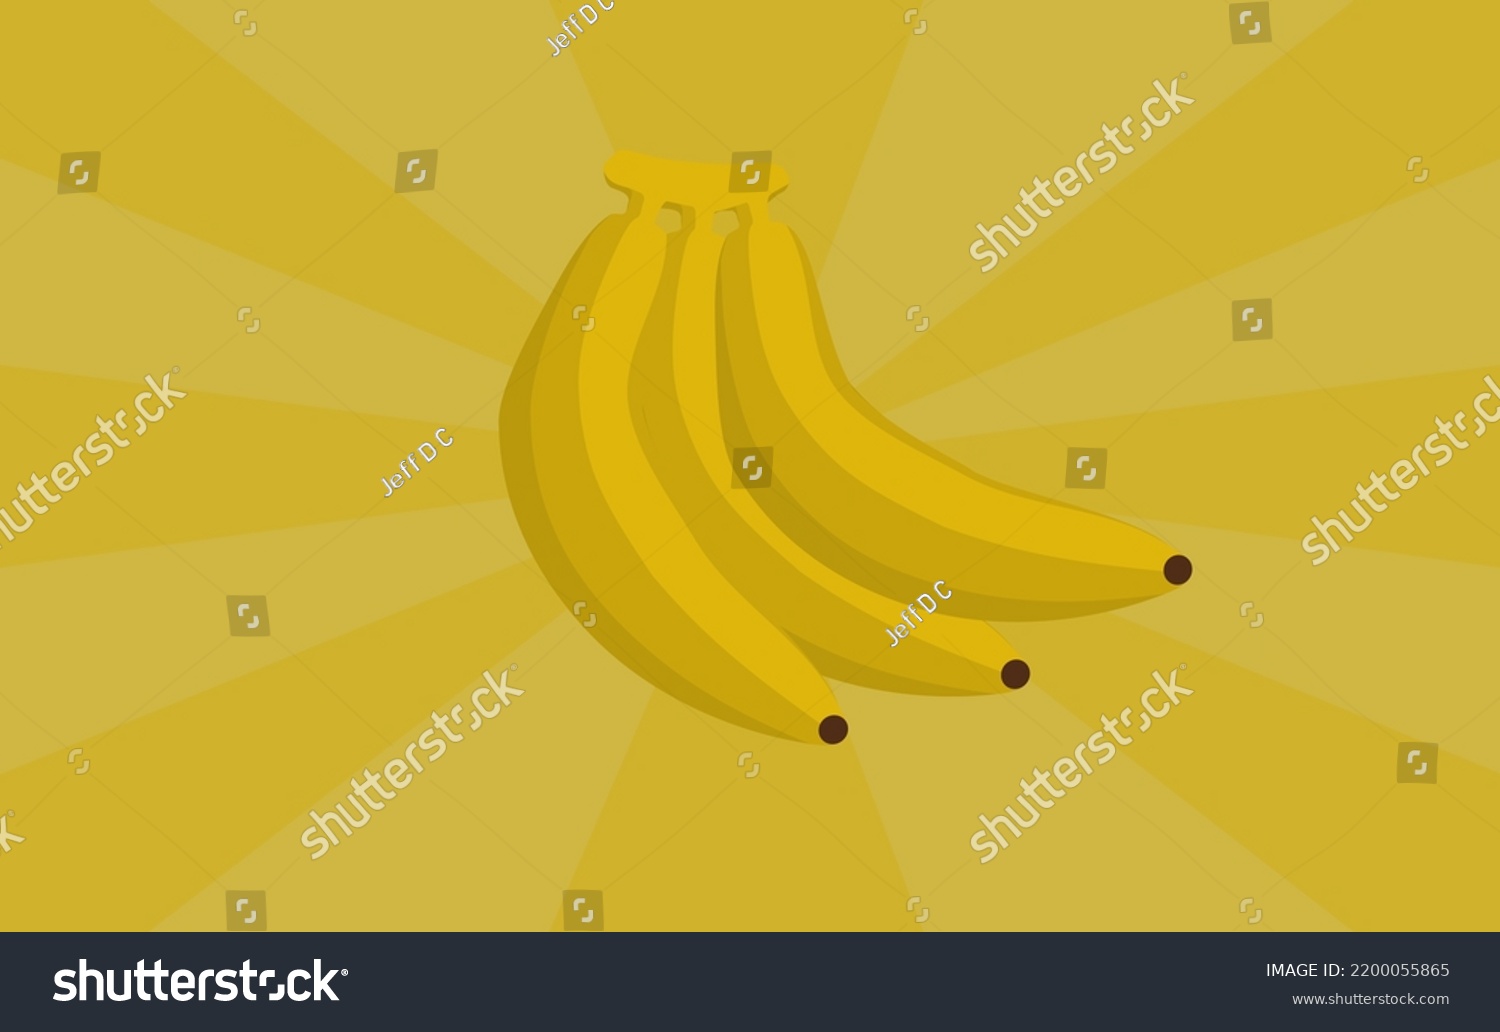 Bananas Vectorial Graphics Cartoon Art Stock Vector Royalty Free 2200055865 Shutterstock